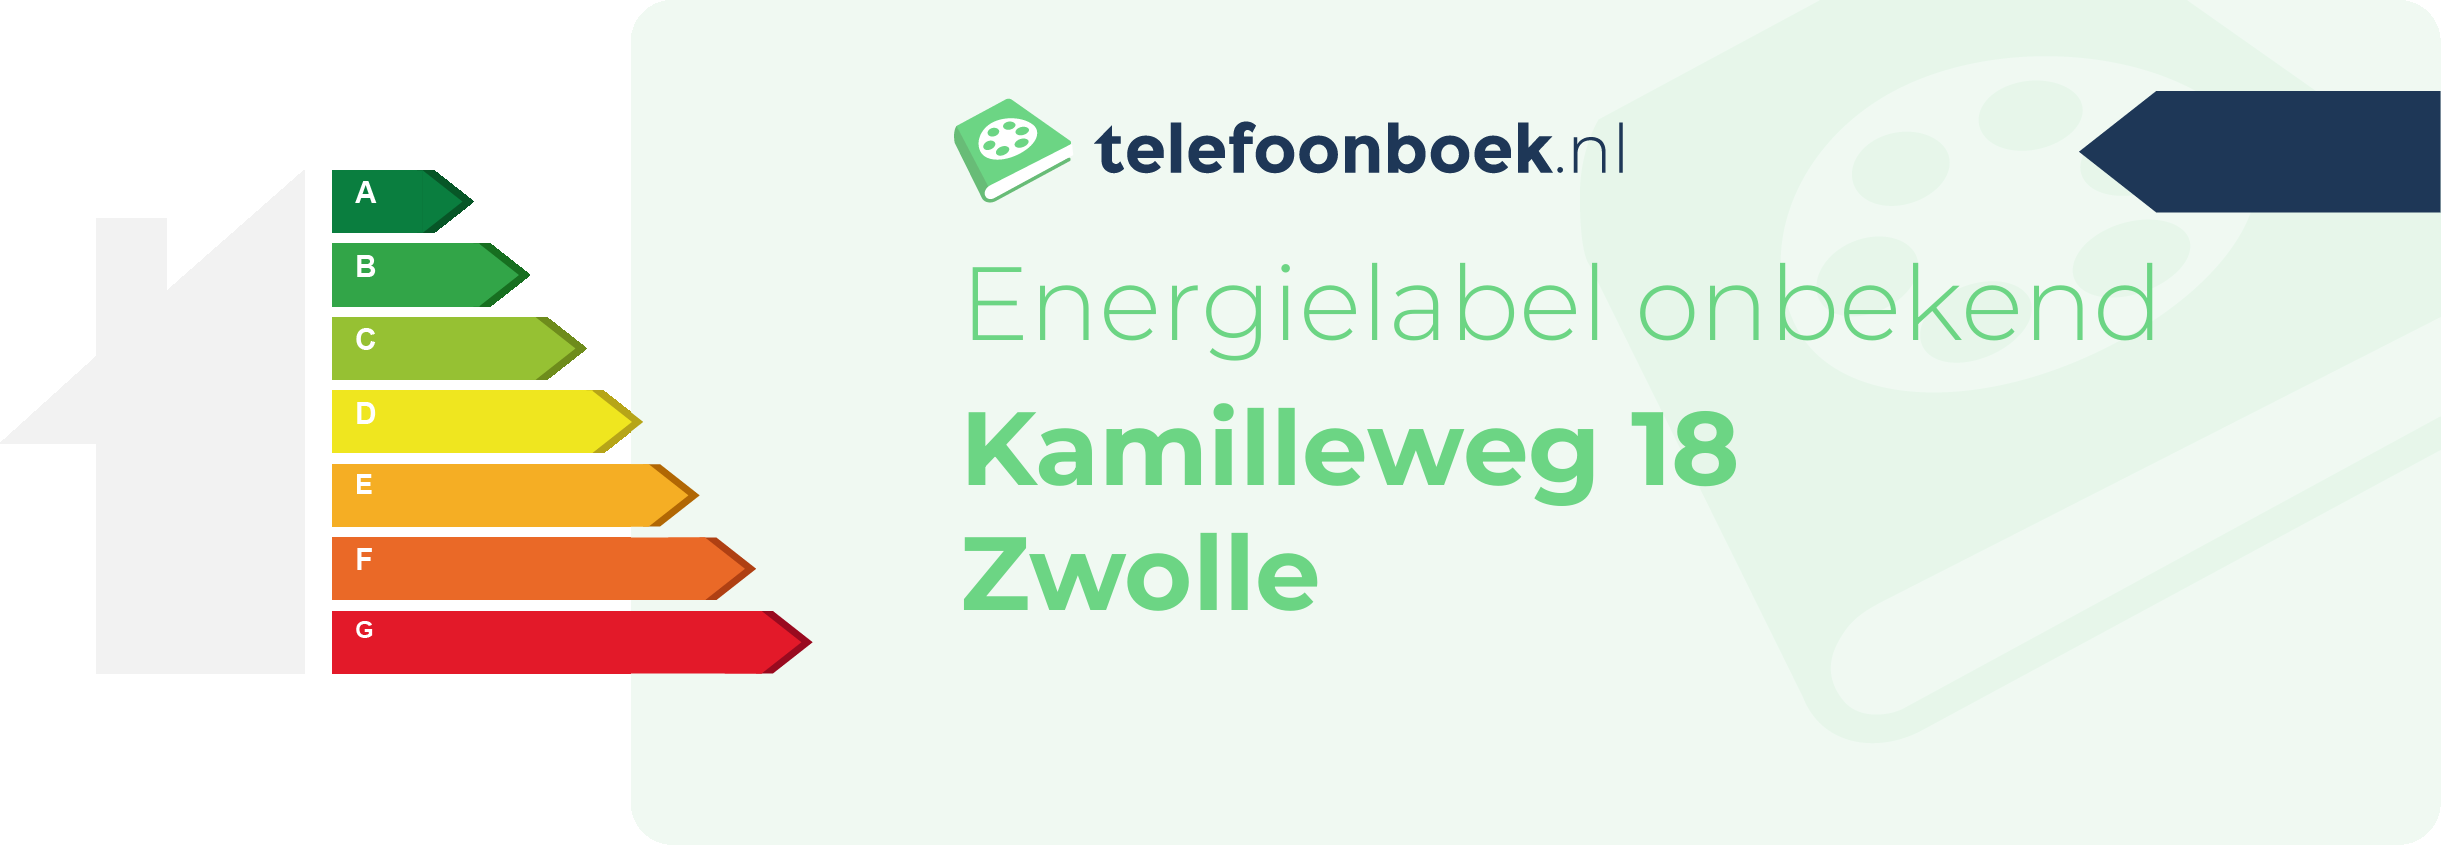 Energielabel Kamilleweg 18 Zwolle